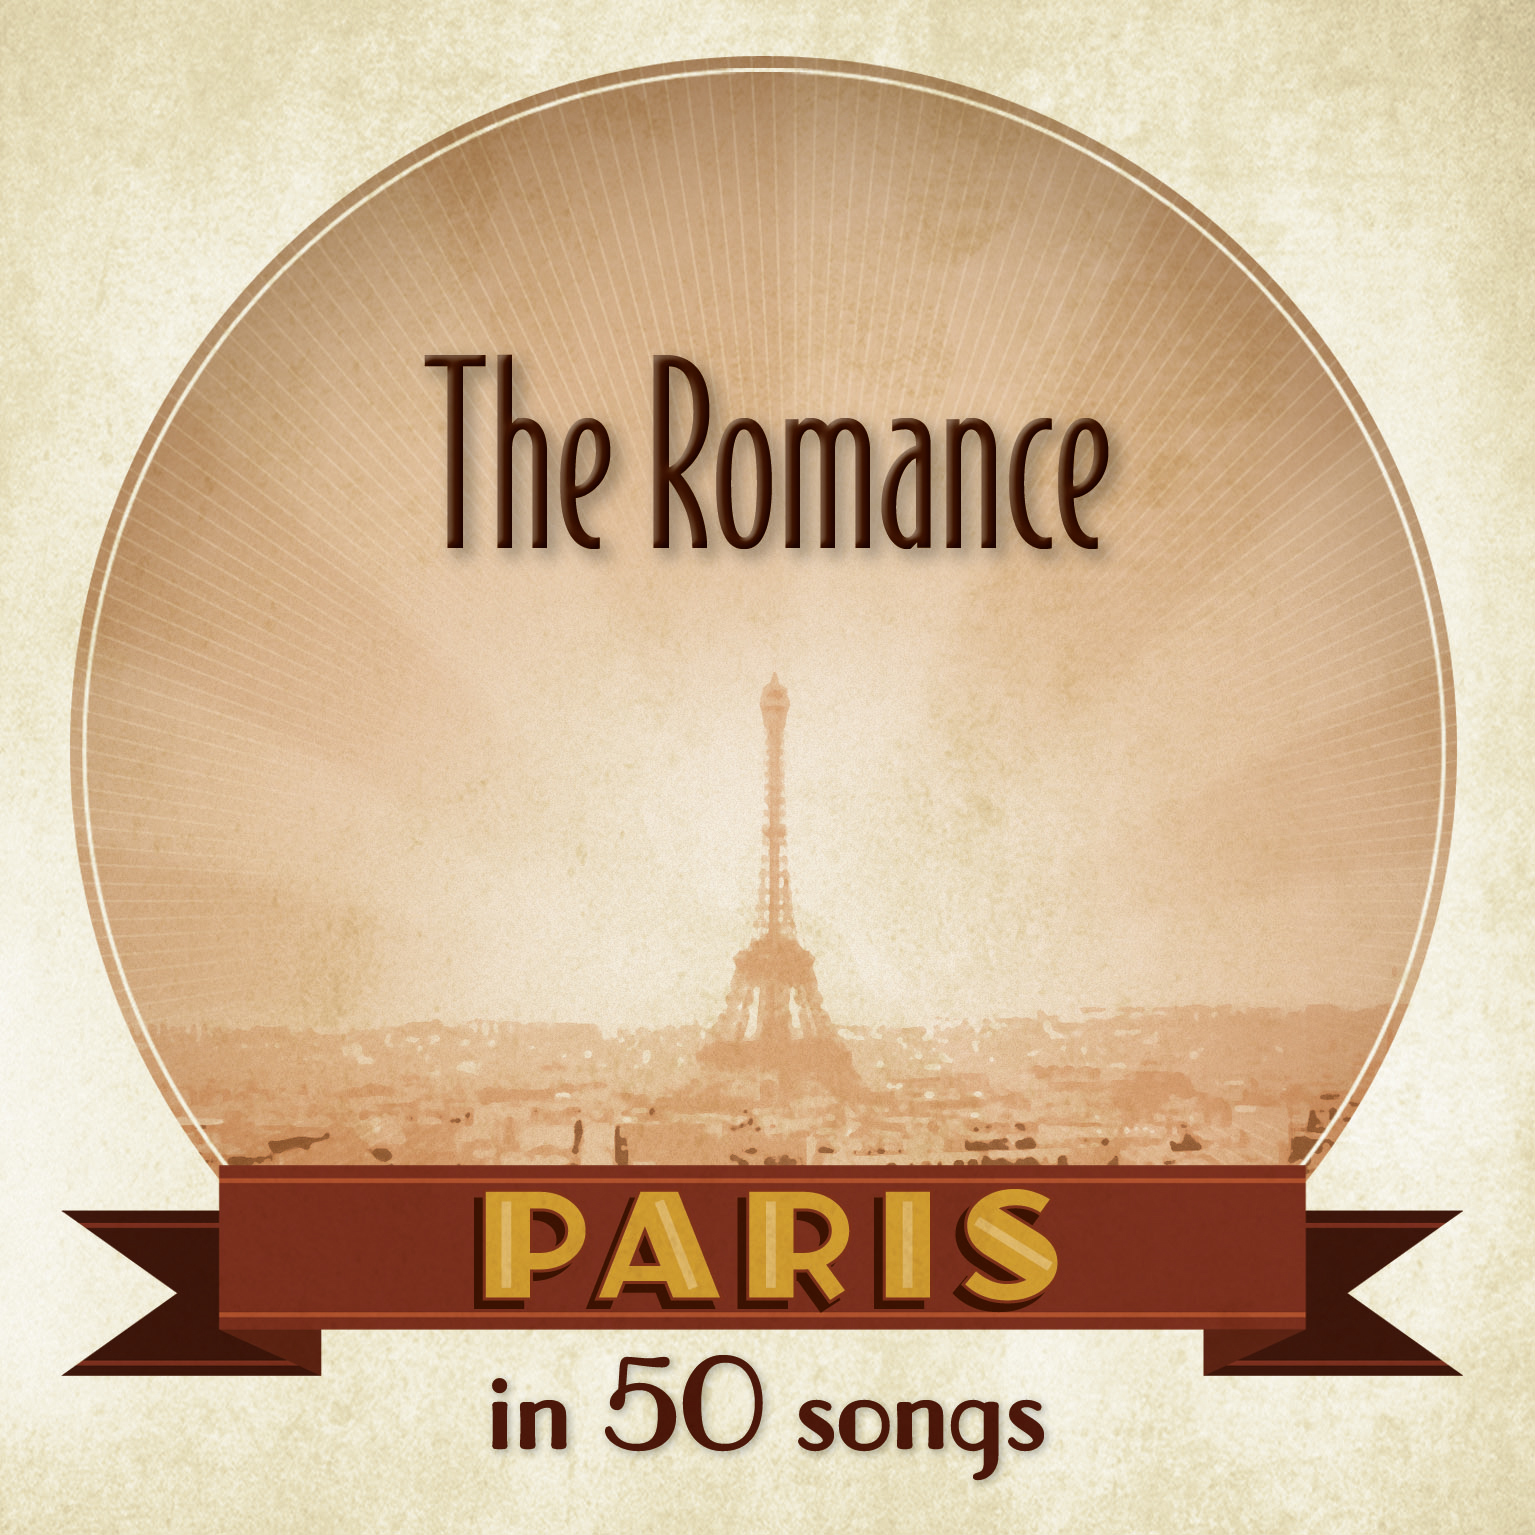 Paris: The Romance in 50 songs